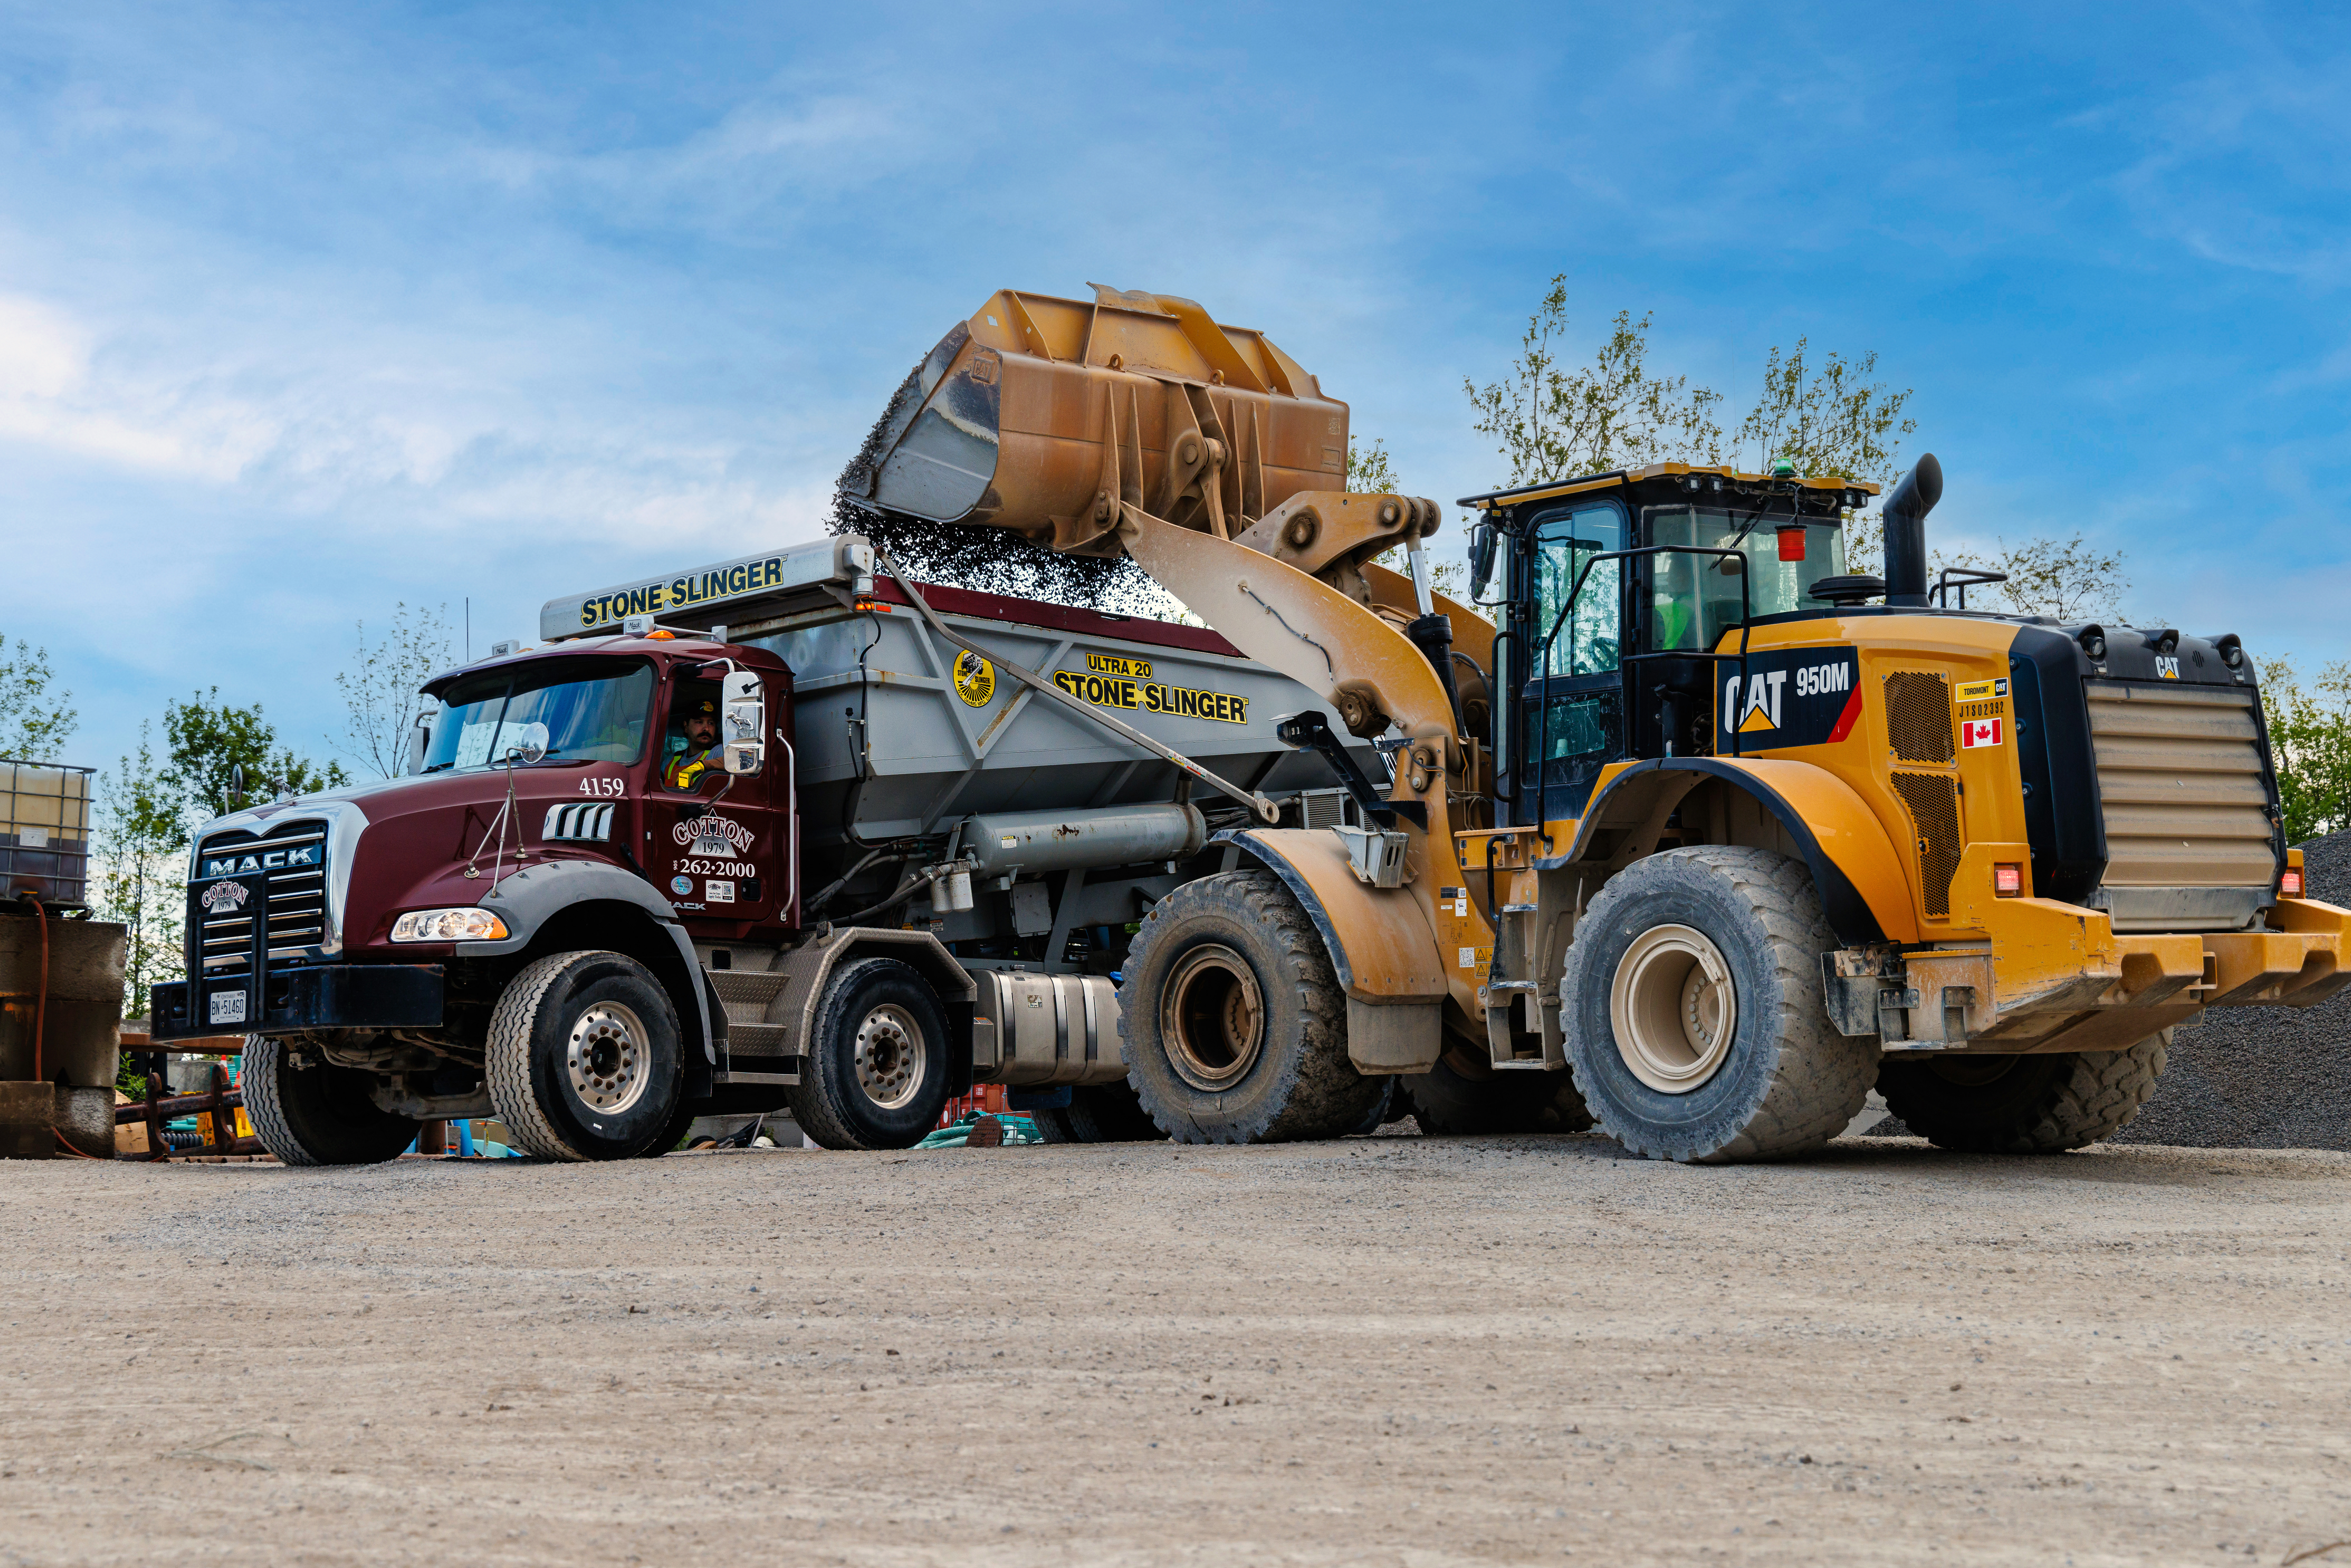 This photo shows a bulldozer dumper stone into a Cotton Inc stone slinger truck.